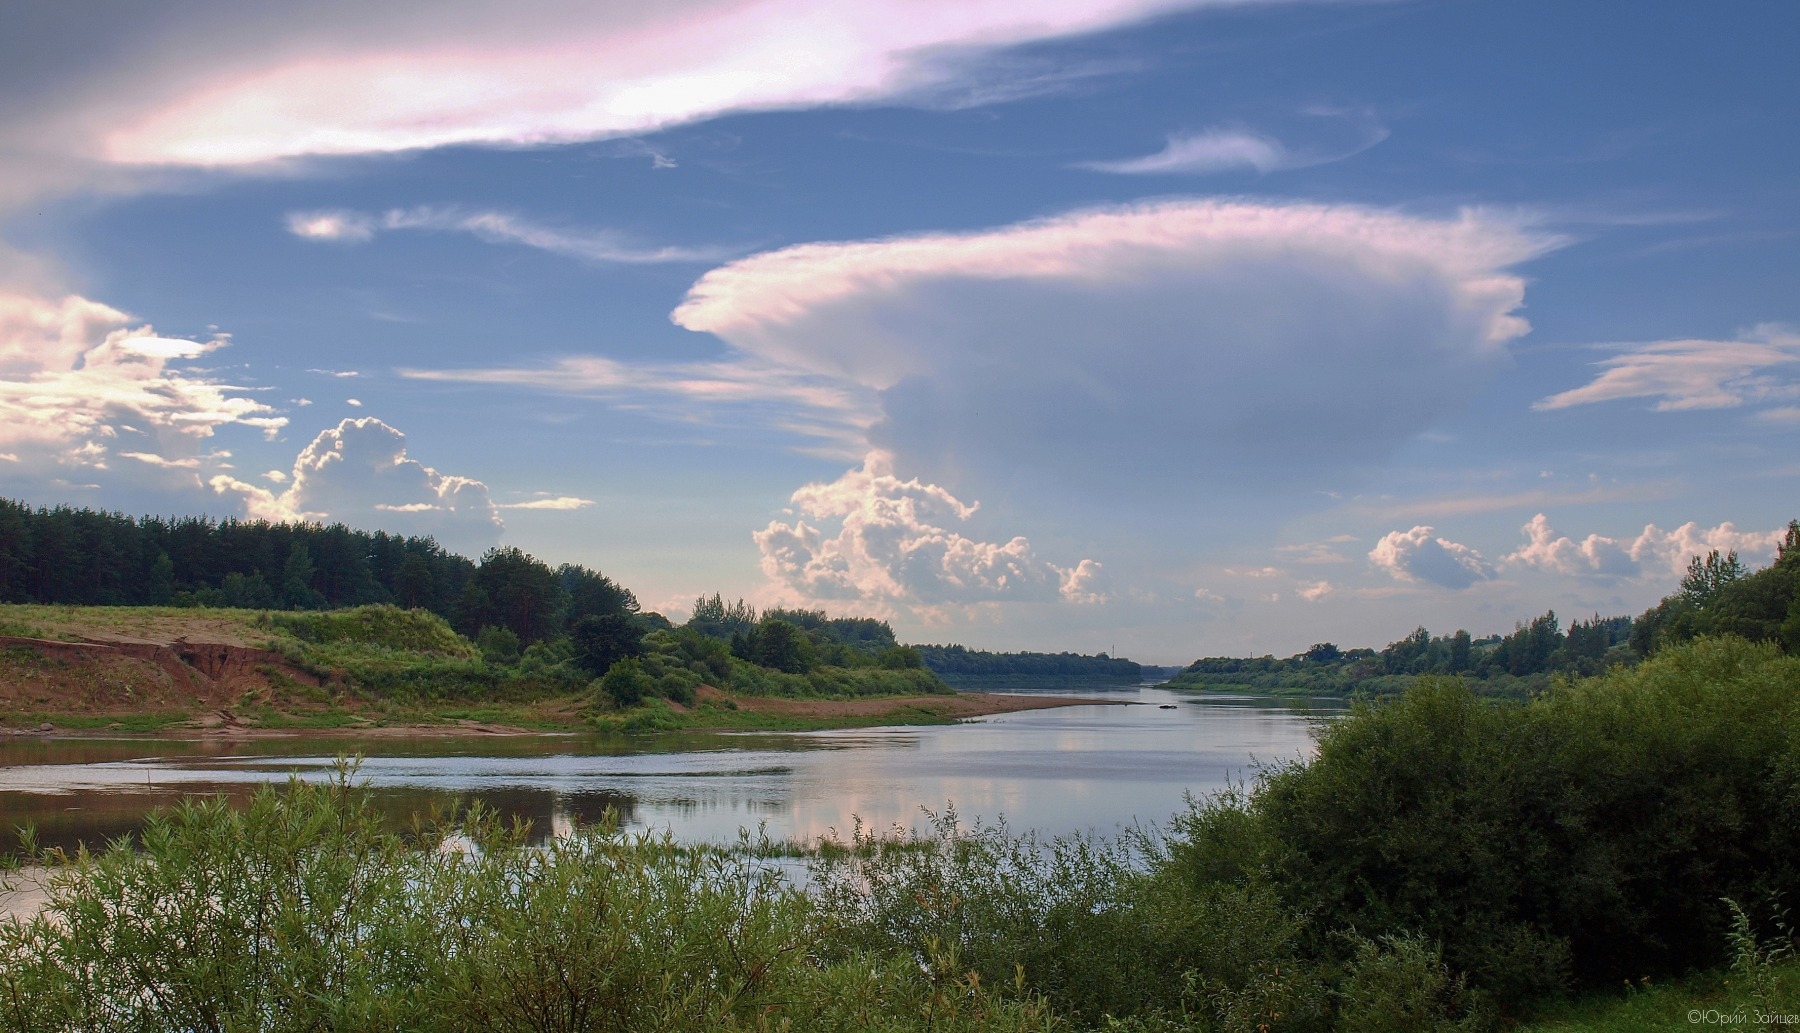 Западная Двина в Полоцке | Фотограф Юрий Зайцев | foto.by фото.бай